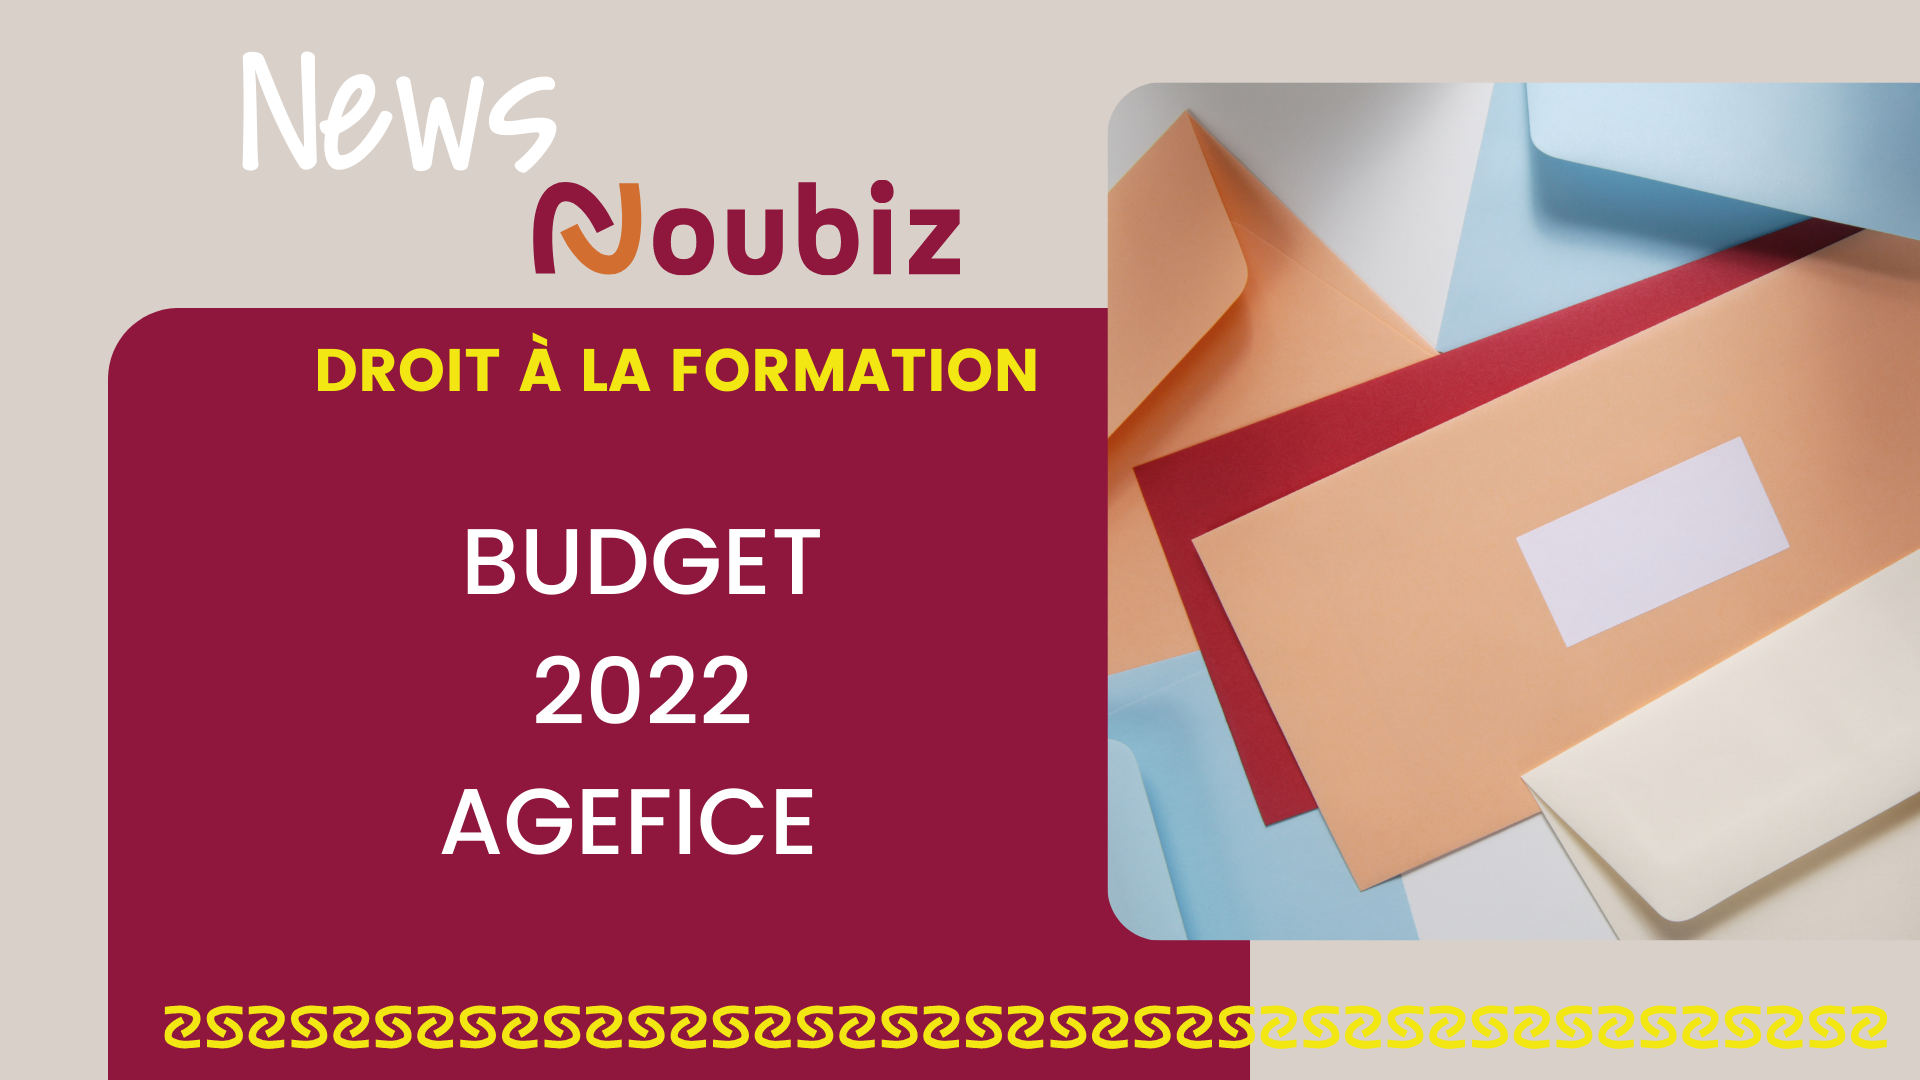 Budget 2022 AGEFICE - Noubiz